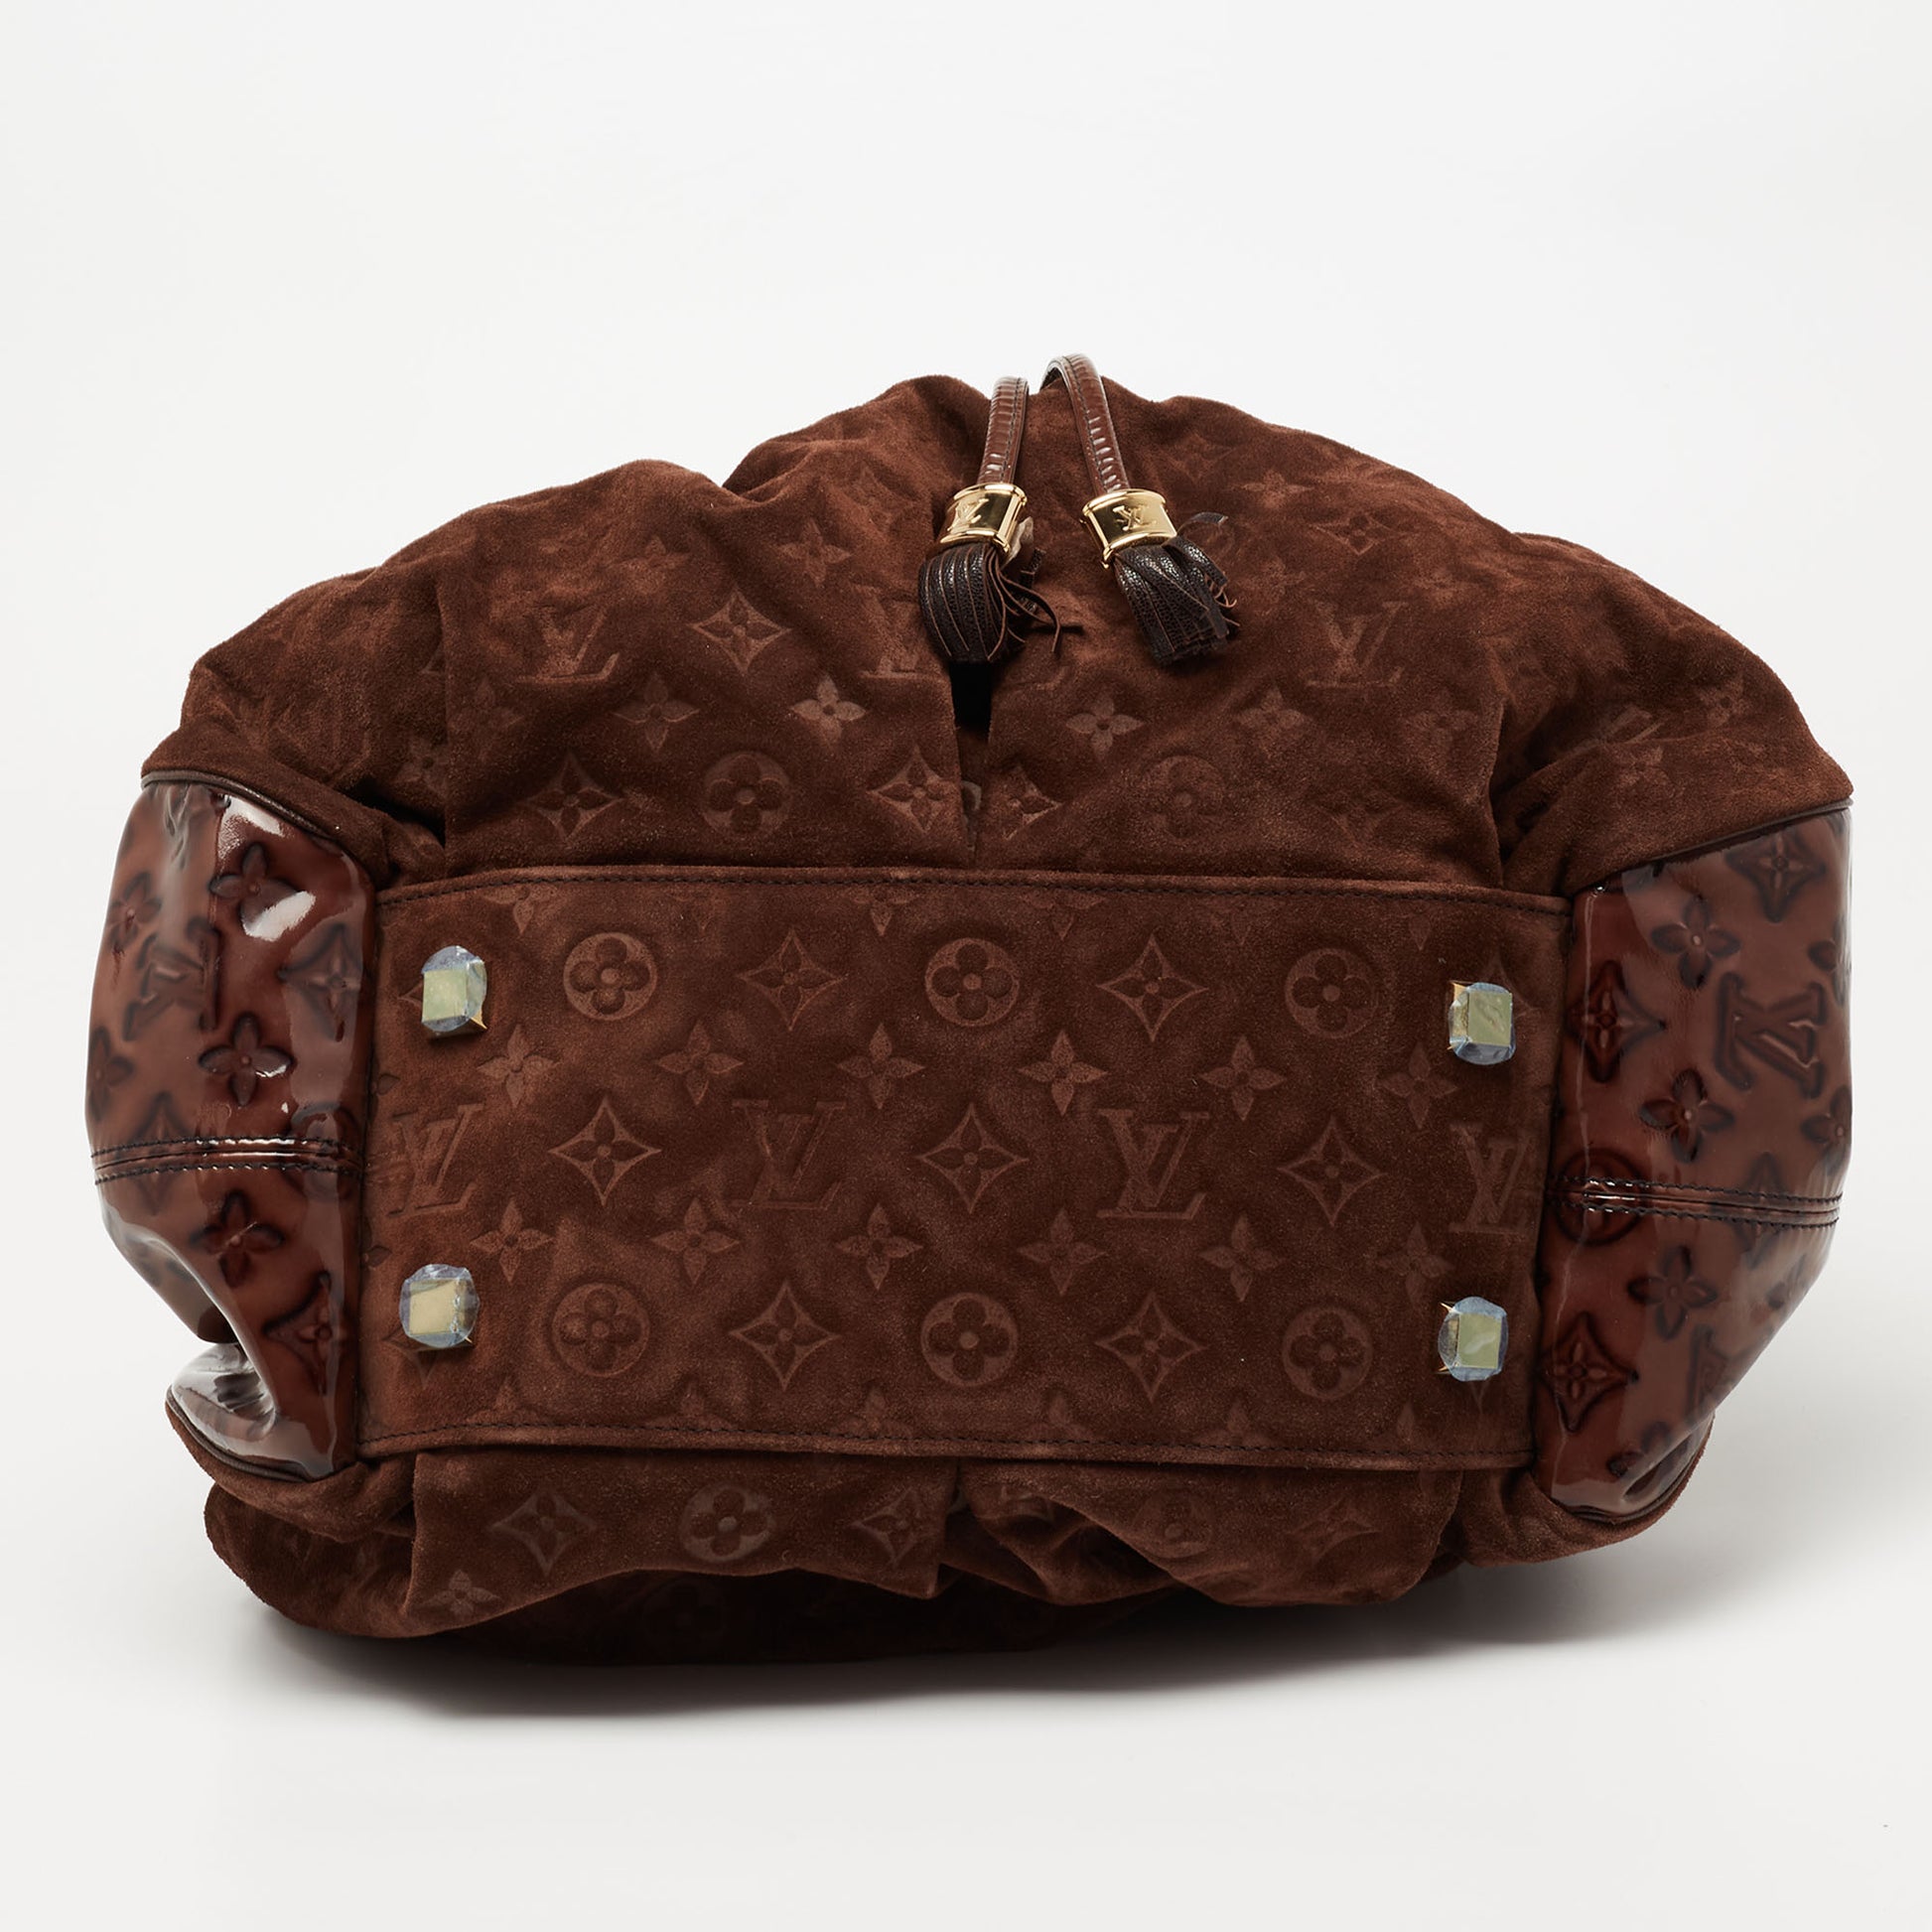 Louis Vuitton Irene Handbag Monogram Embossed Suede and Patent